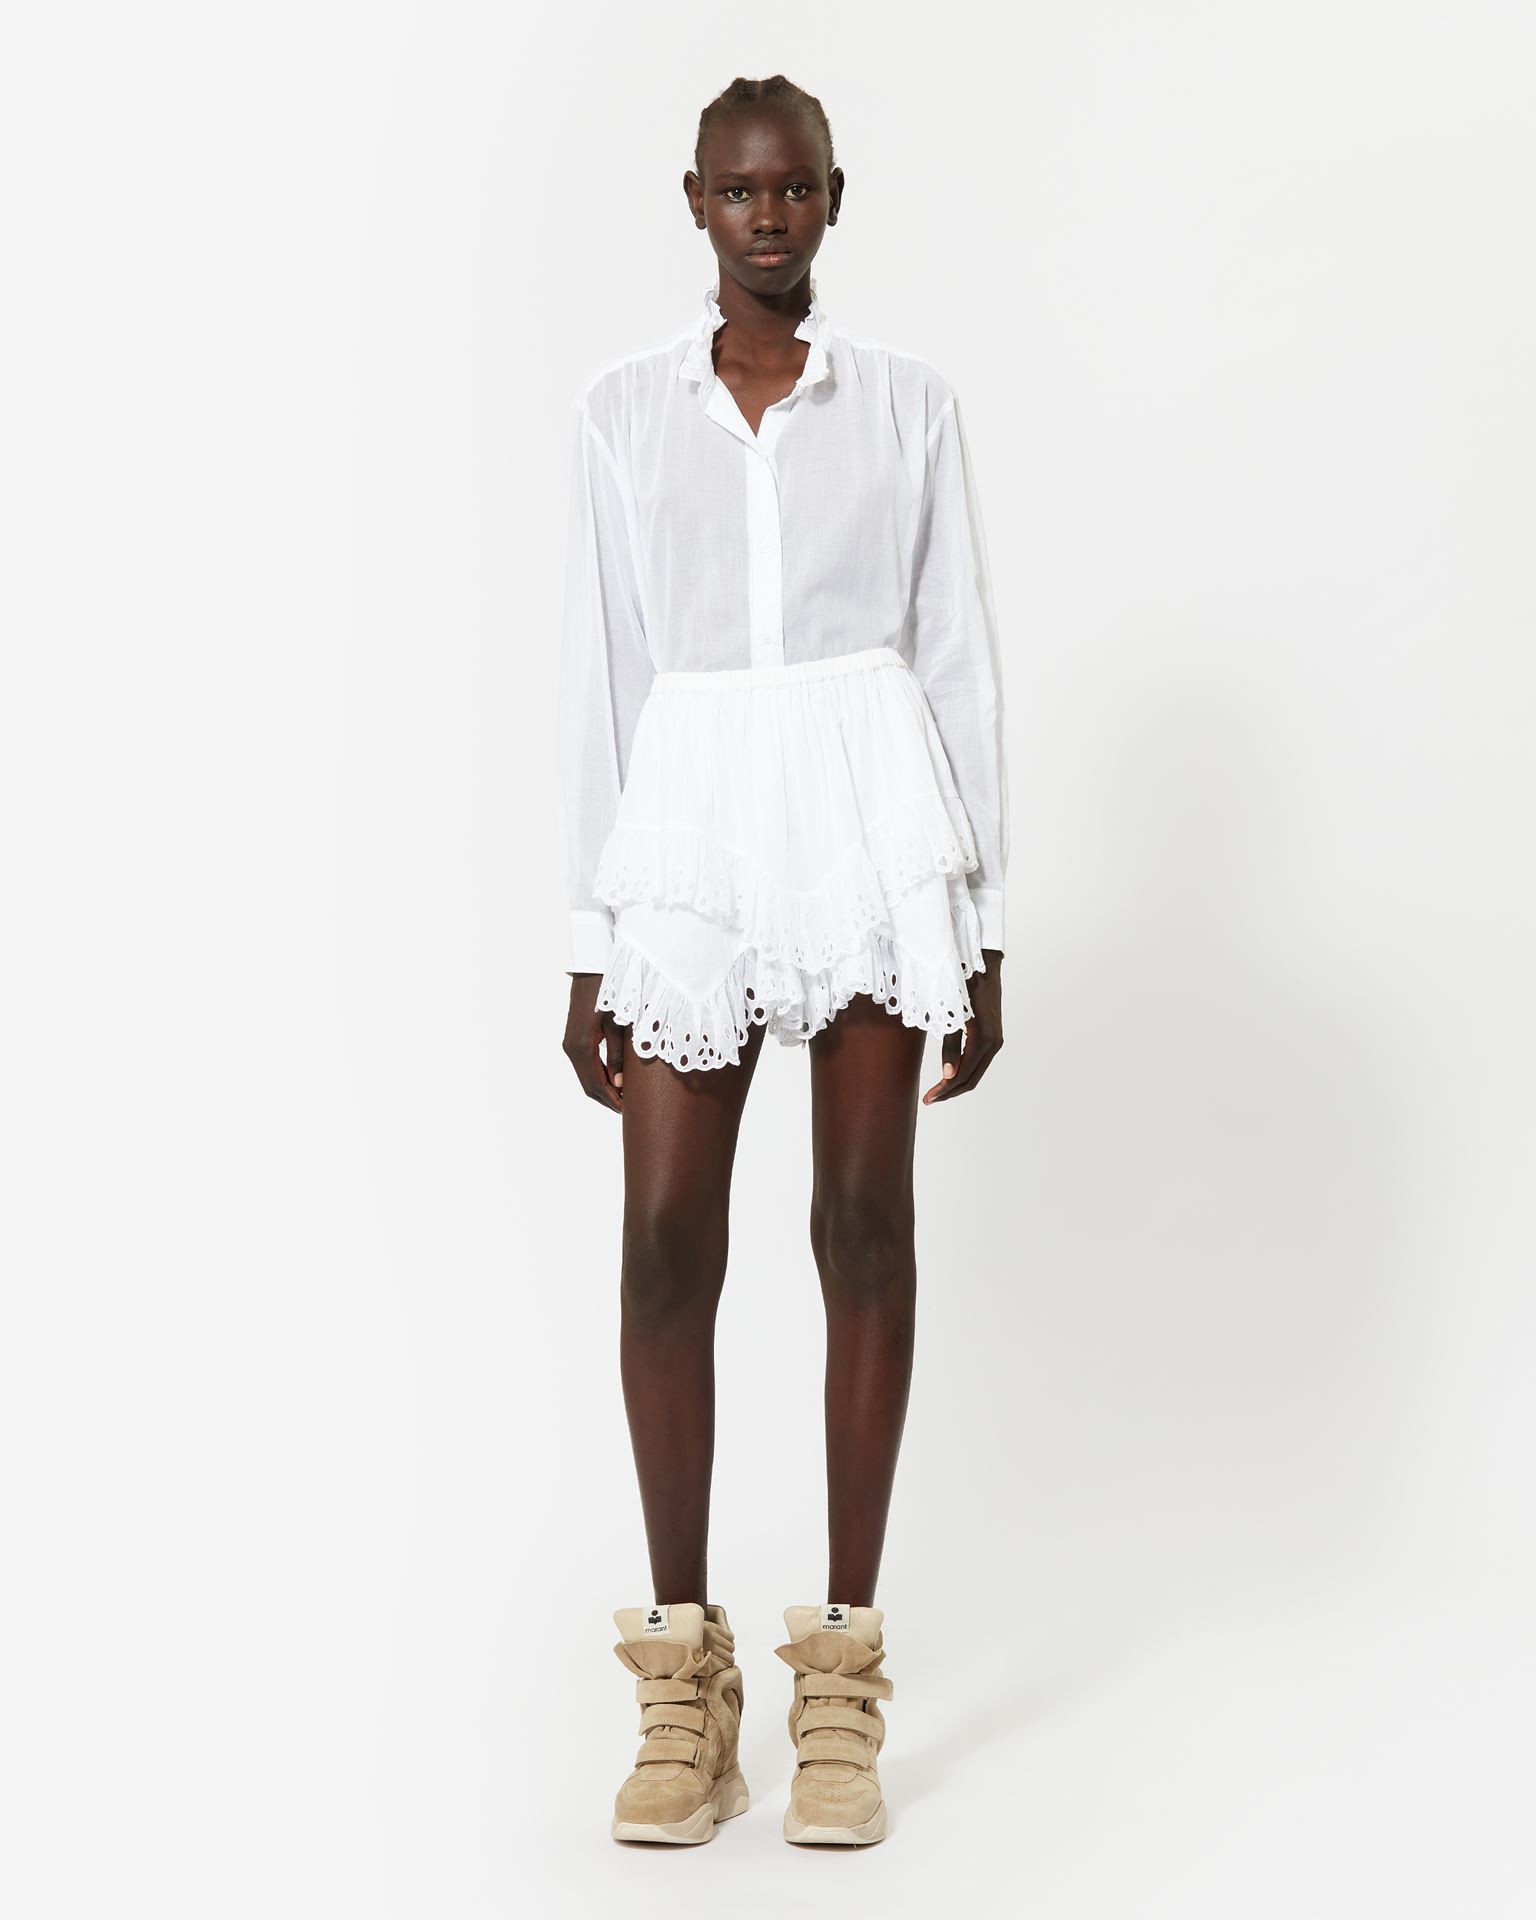 Isabel Marant Marant Étoile, Kaddy Cotton Shorts - Women - White